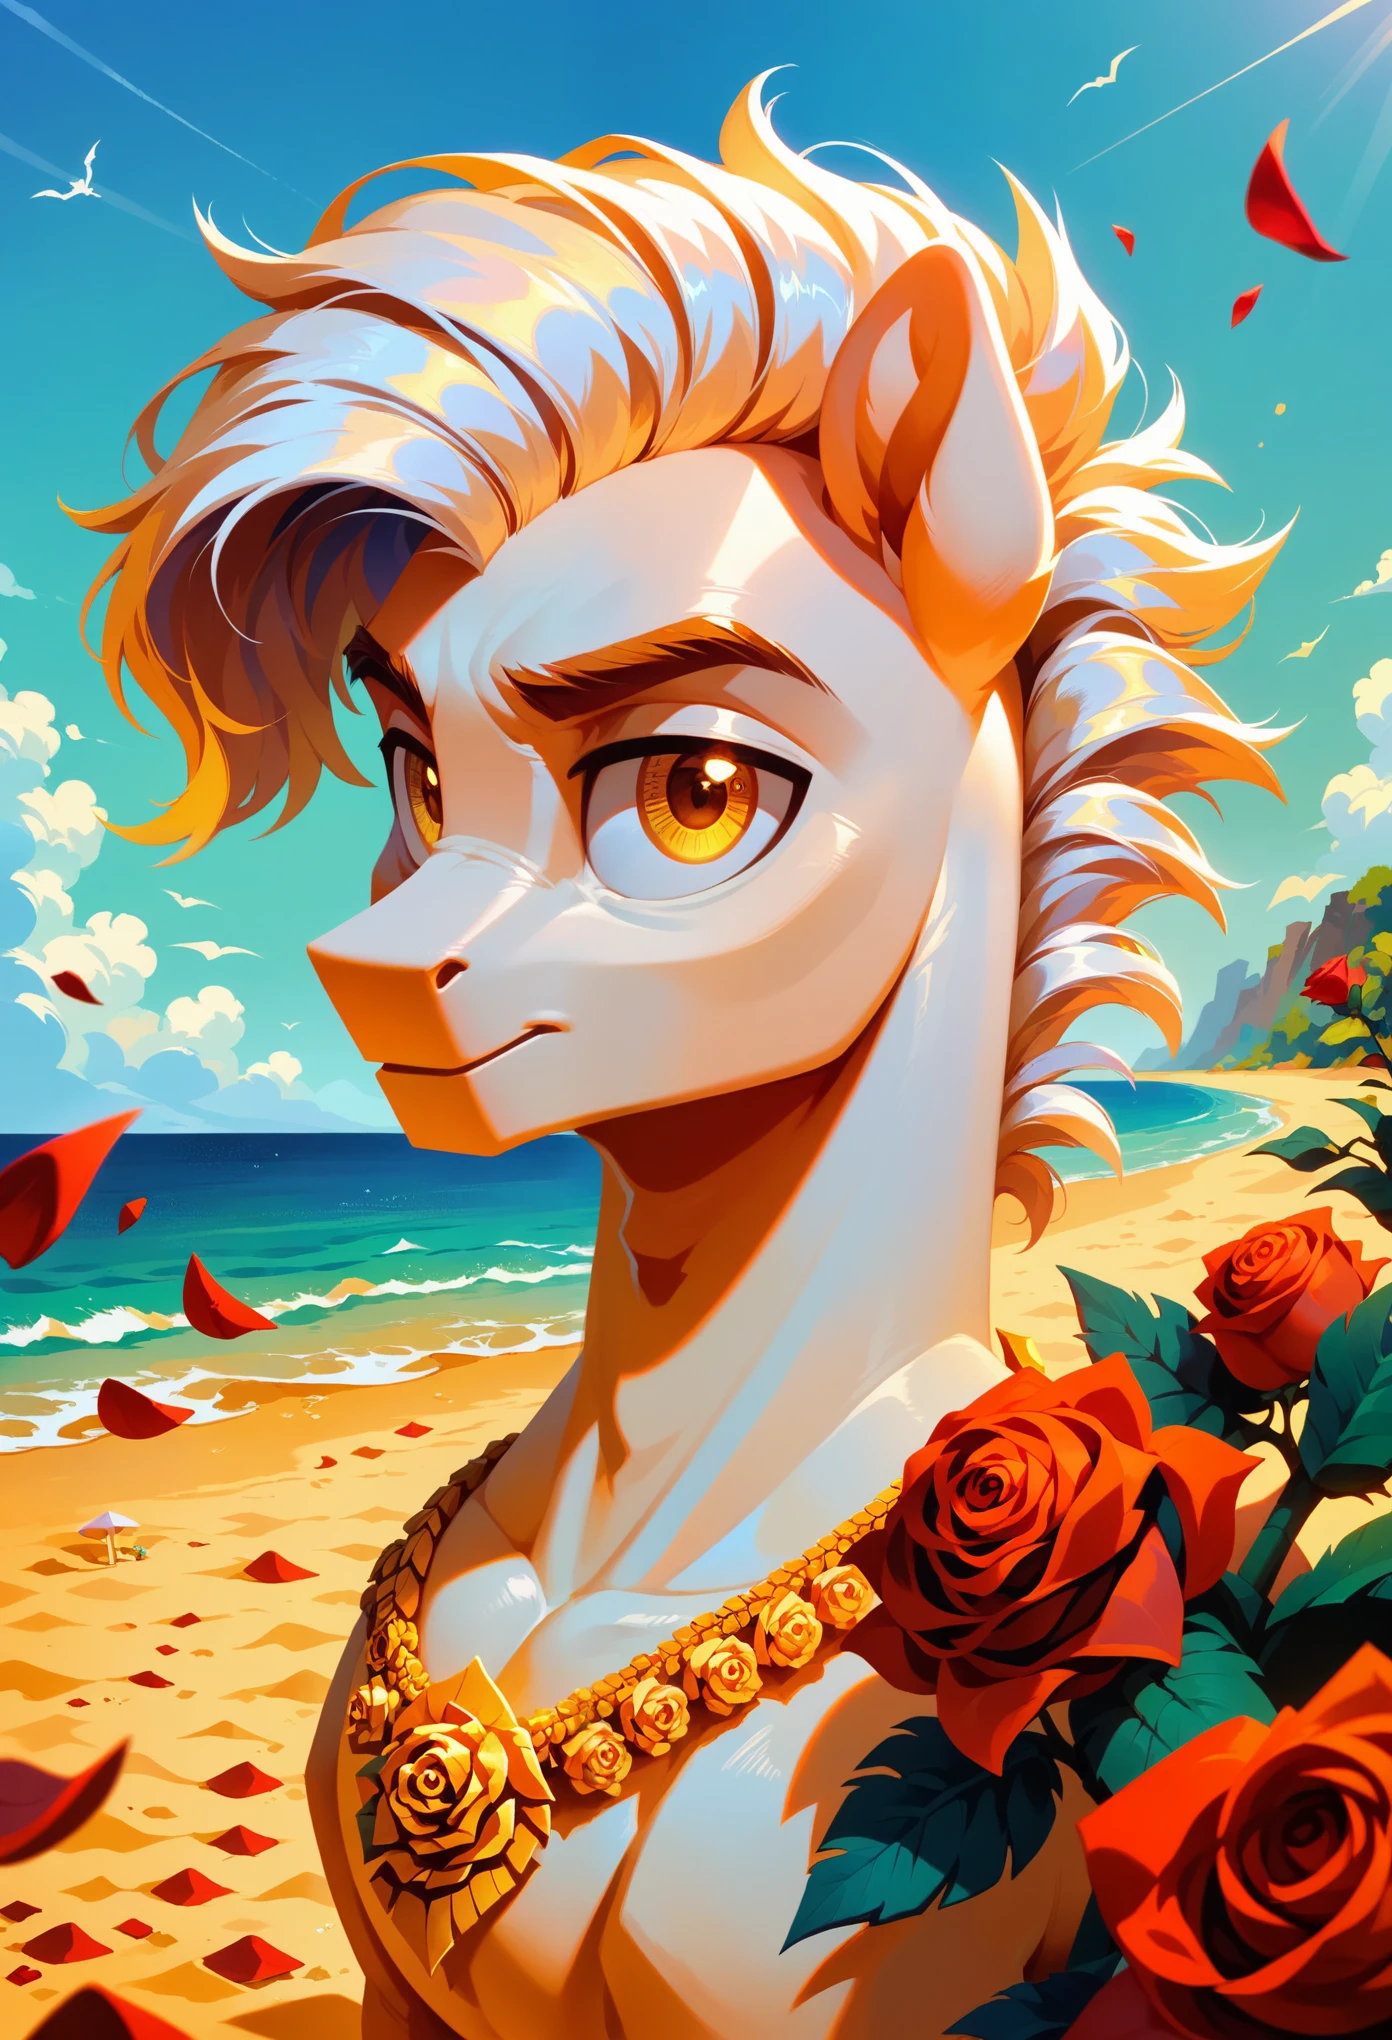 score_9, score_8_up, score_7_up,  ral-ltlpowny, golden roses, male pony, white mane, gold eyes, aesthetic, beach background